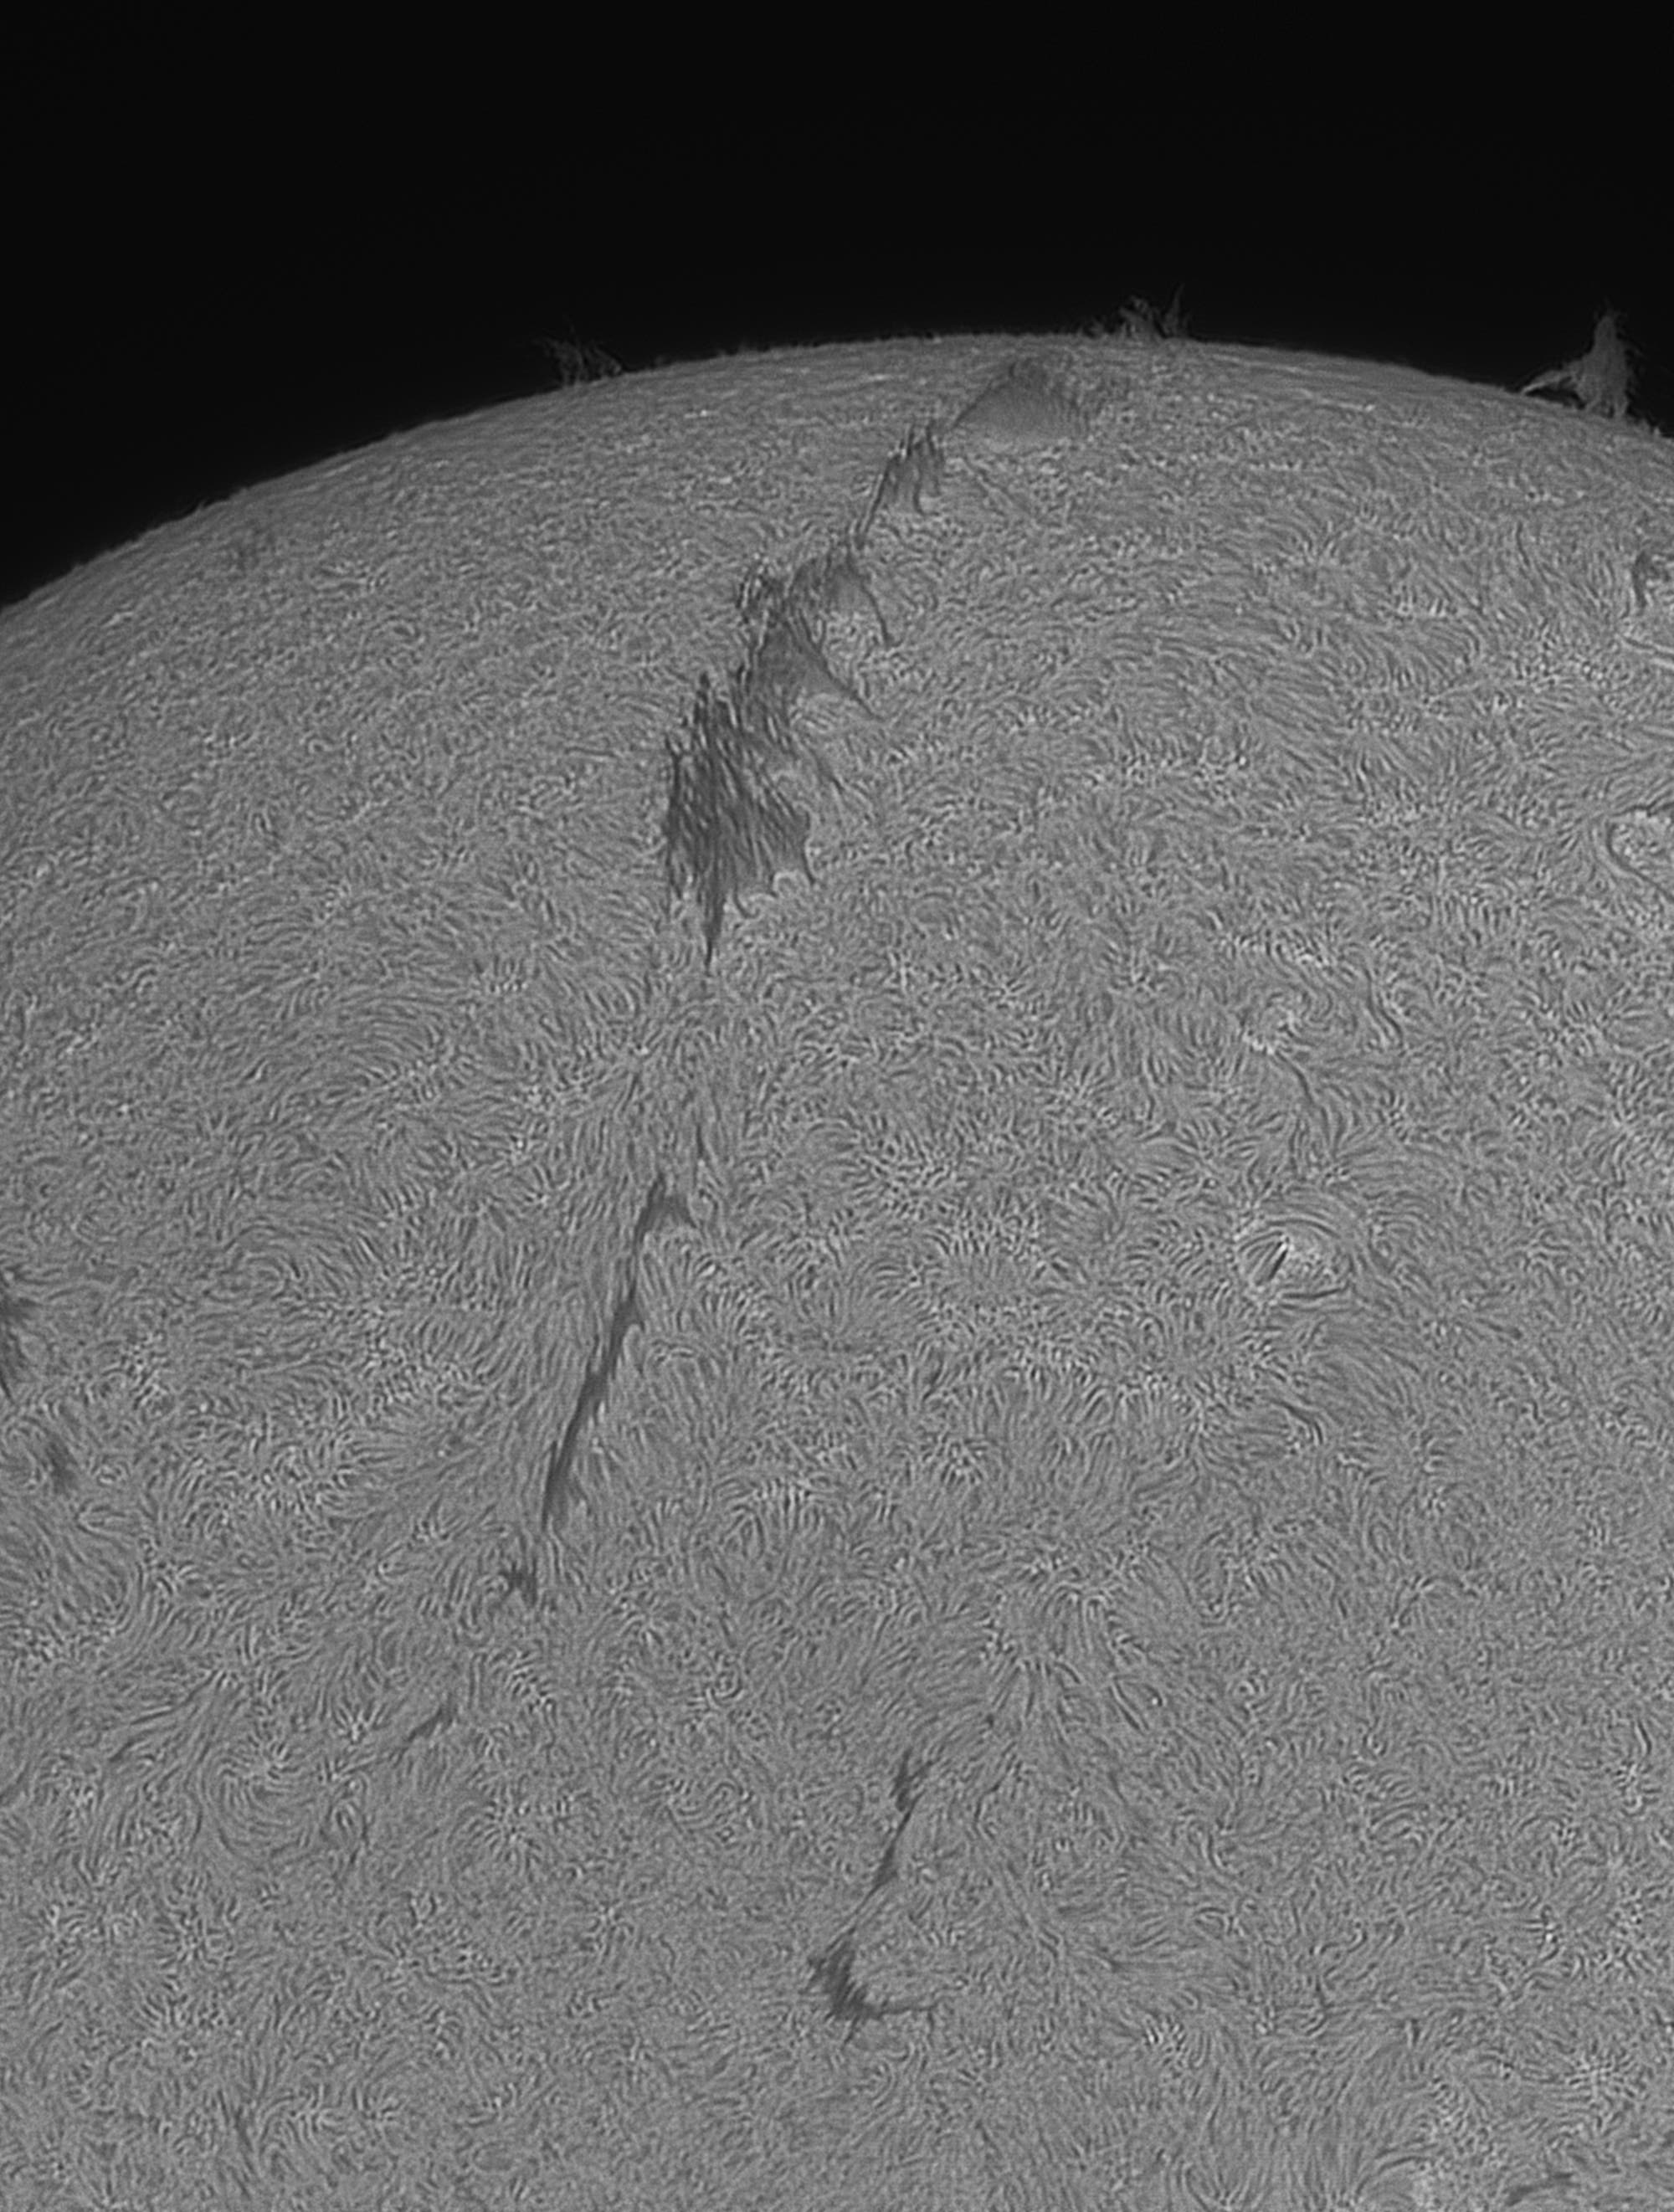 Filament am Südostrand der Sonne (7. September 2023)